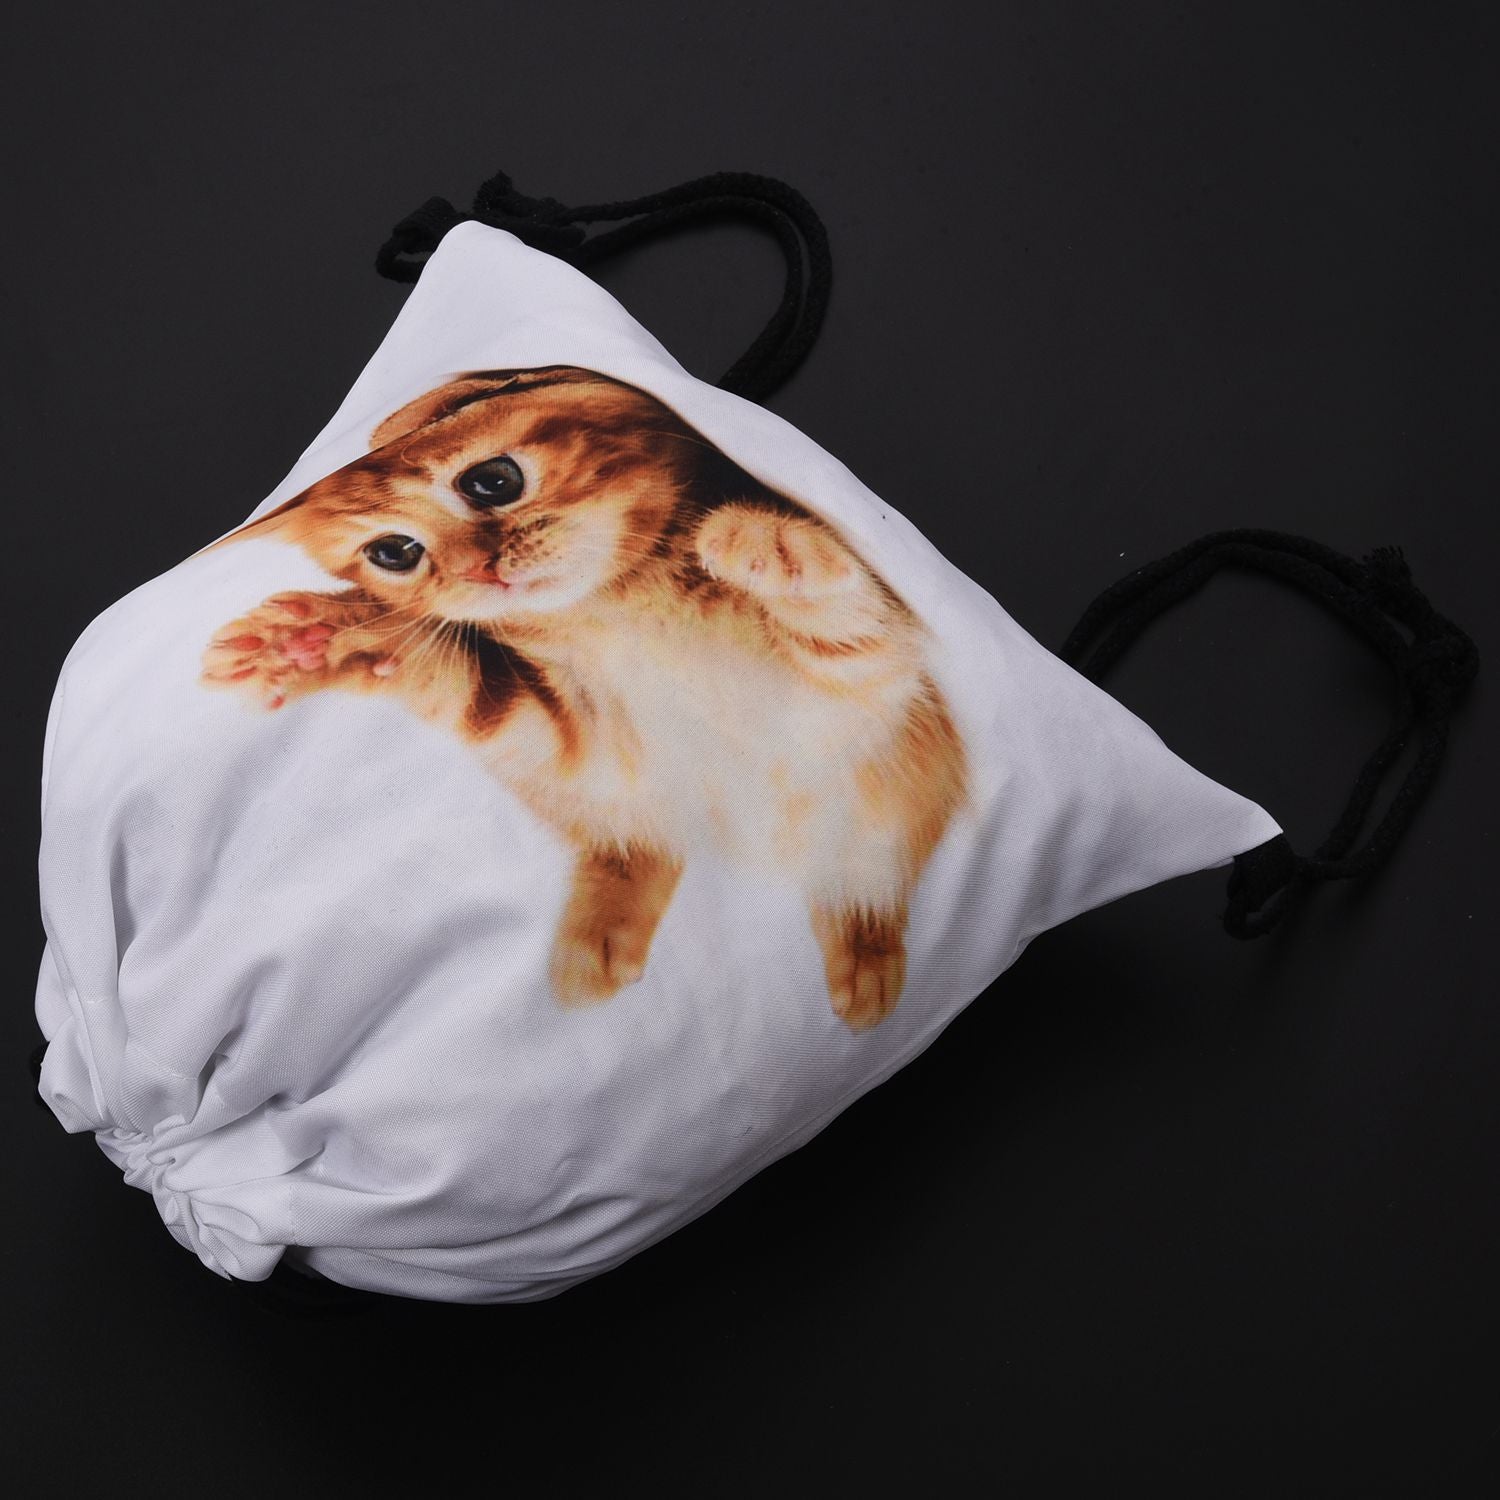 Unisex Emoji Backpacks 3D Printing Bags Drawstring Backpack( light yellow cat)39*30cm - ebowsos